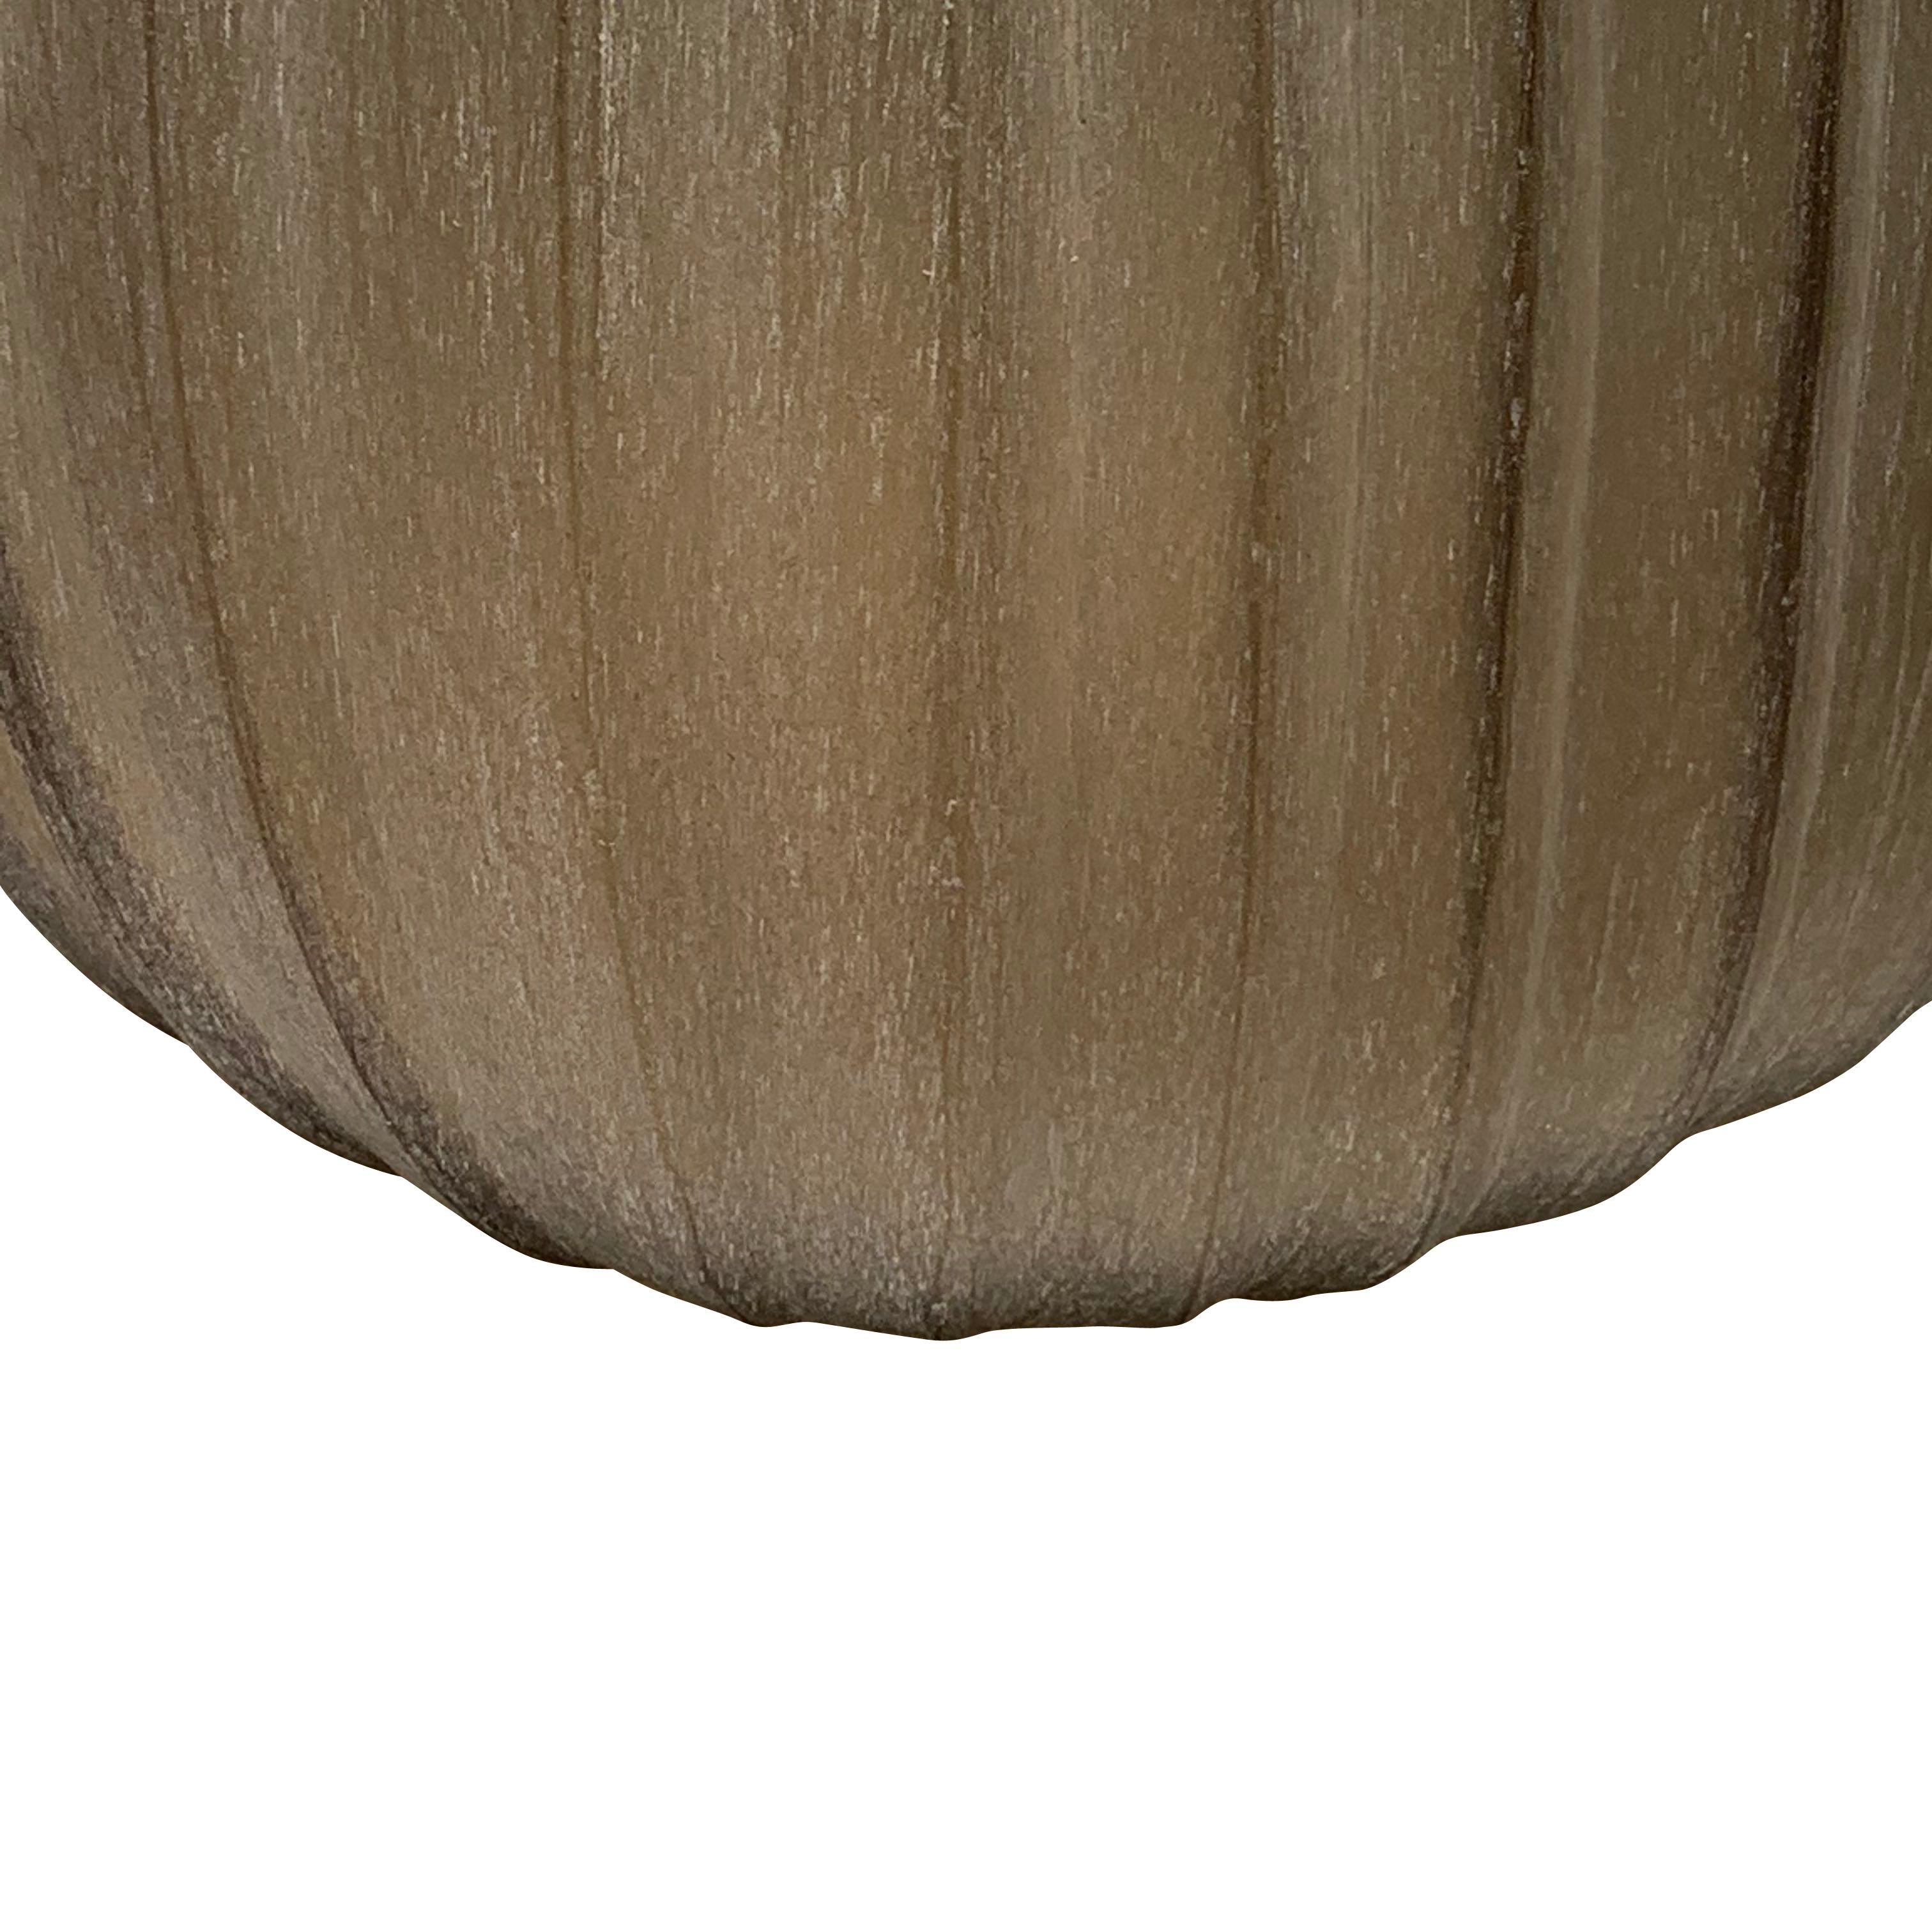 Romanian frosted tan glass pumpkin shape vase
Vertical rib design.
ARRIVAL TBD
 